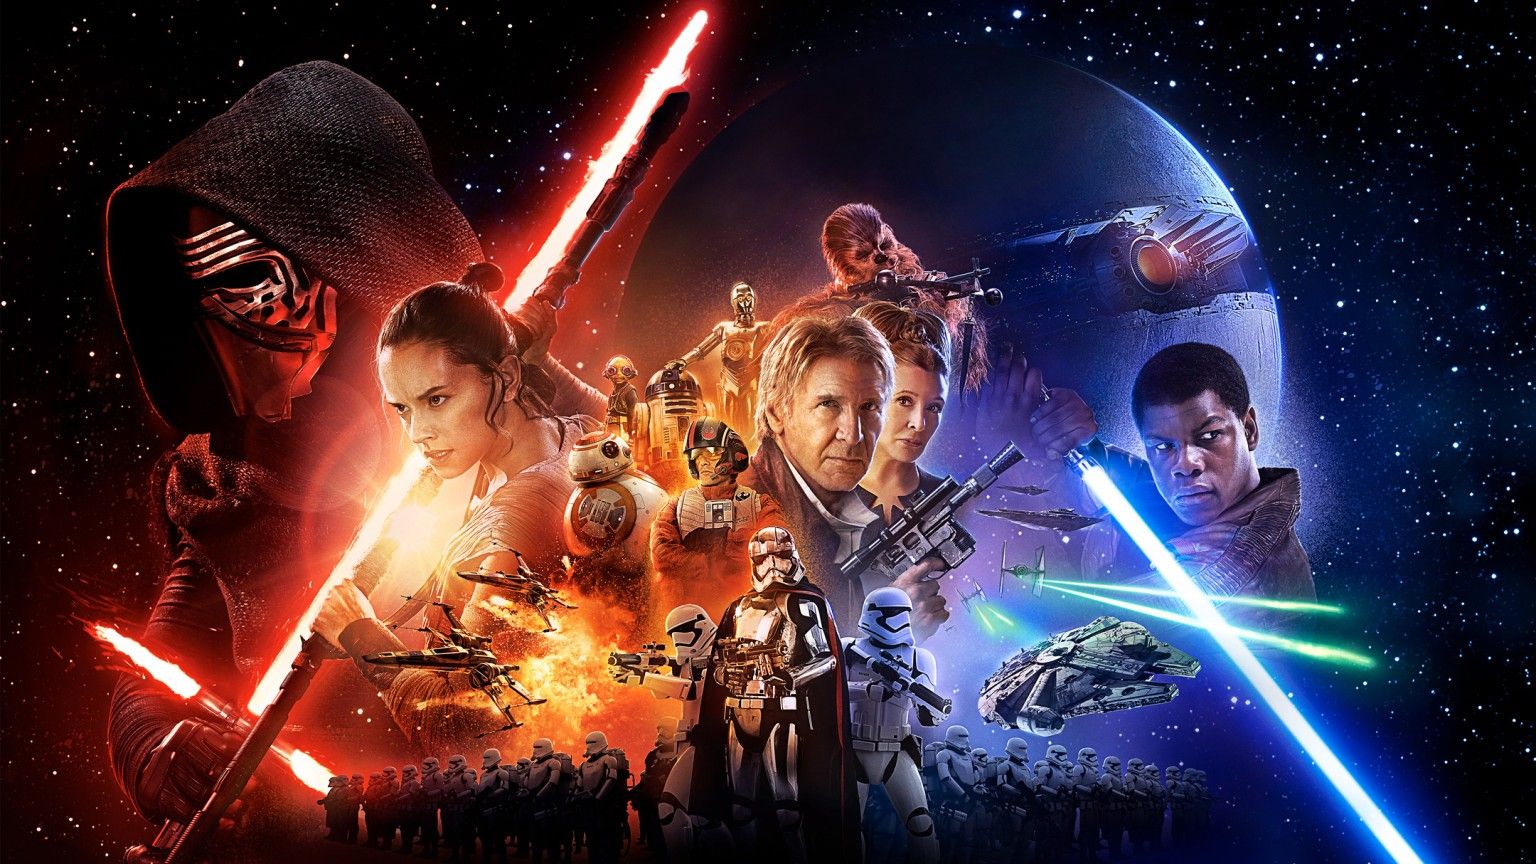 #Rey, #Star Wars, #artwork, #Kylo Ren, #Star Wars: The Force Awakens wallpaper